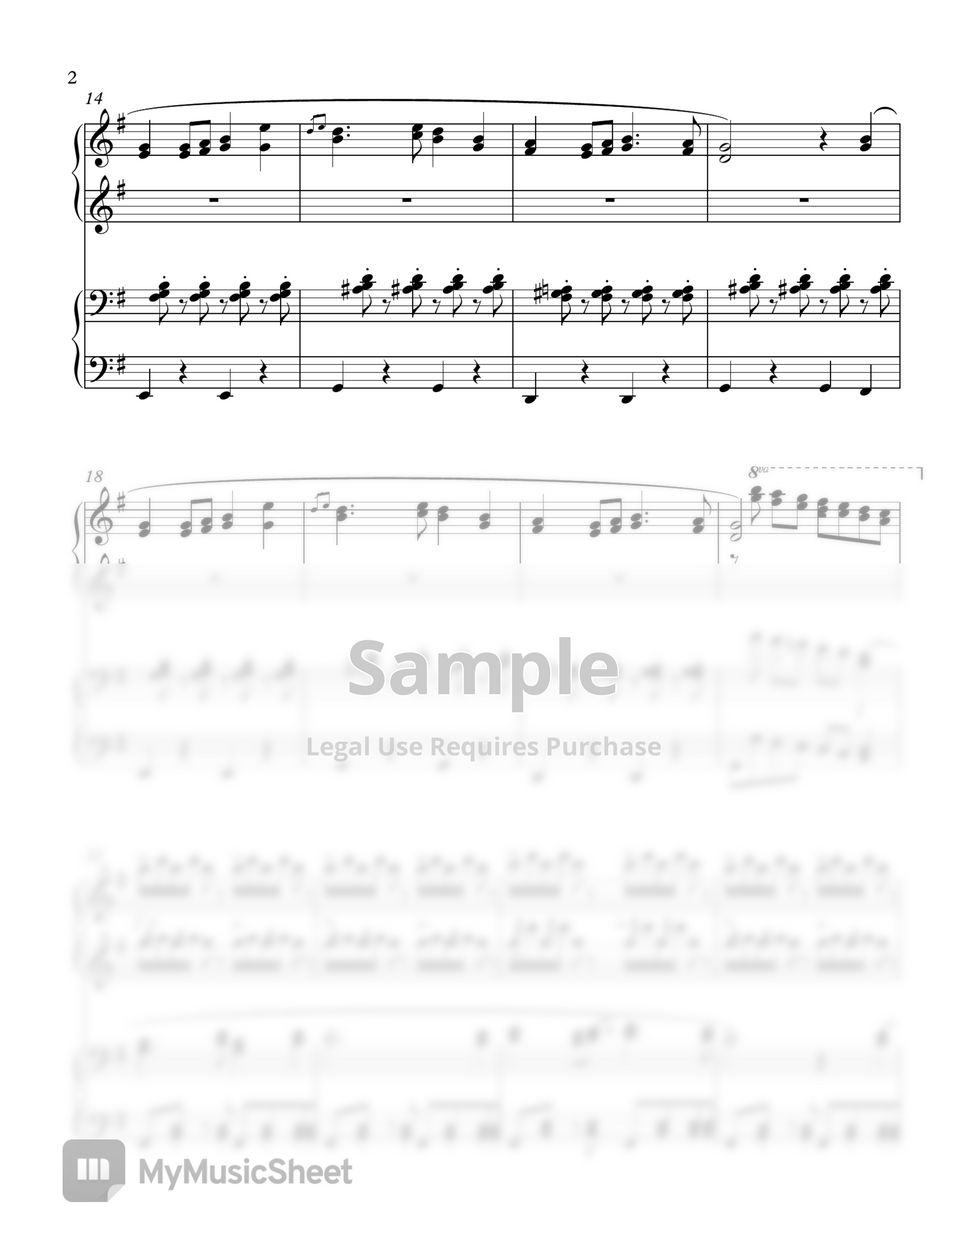 Malaysian folk tune - Lenggang Kangkung for 1 piano 4 hands by Chuan-Li Ko